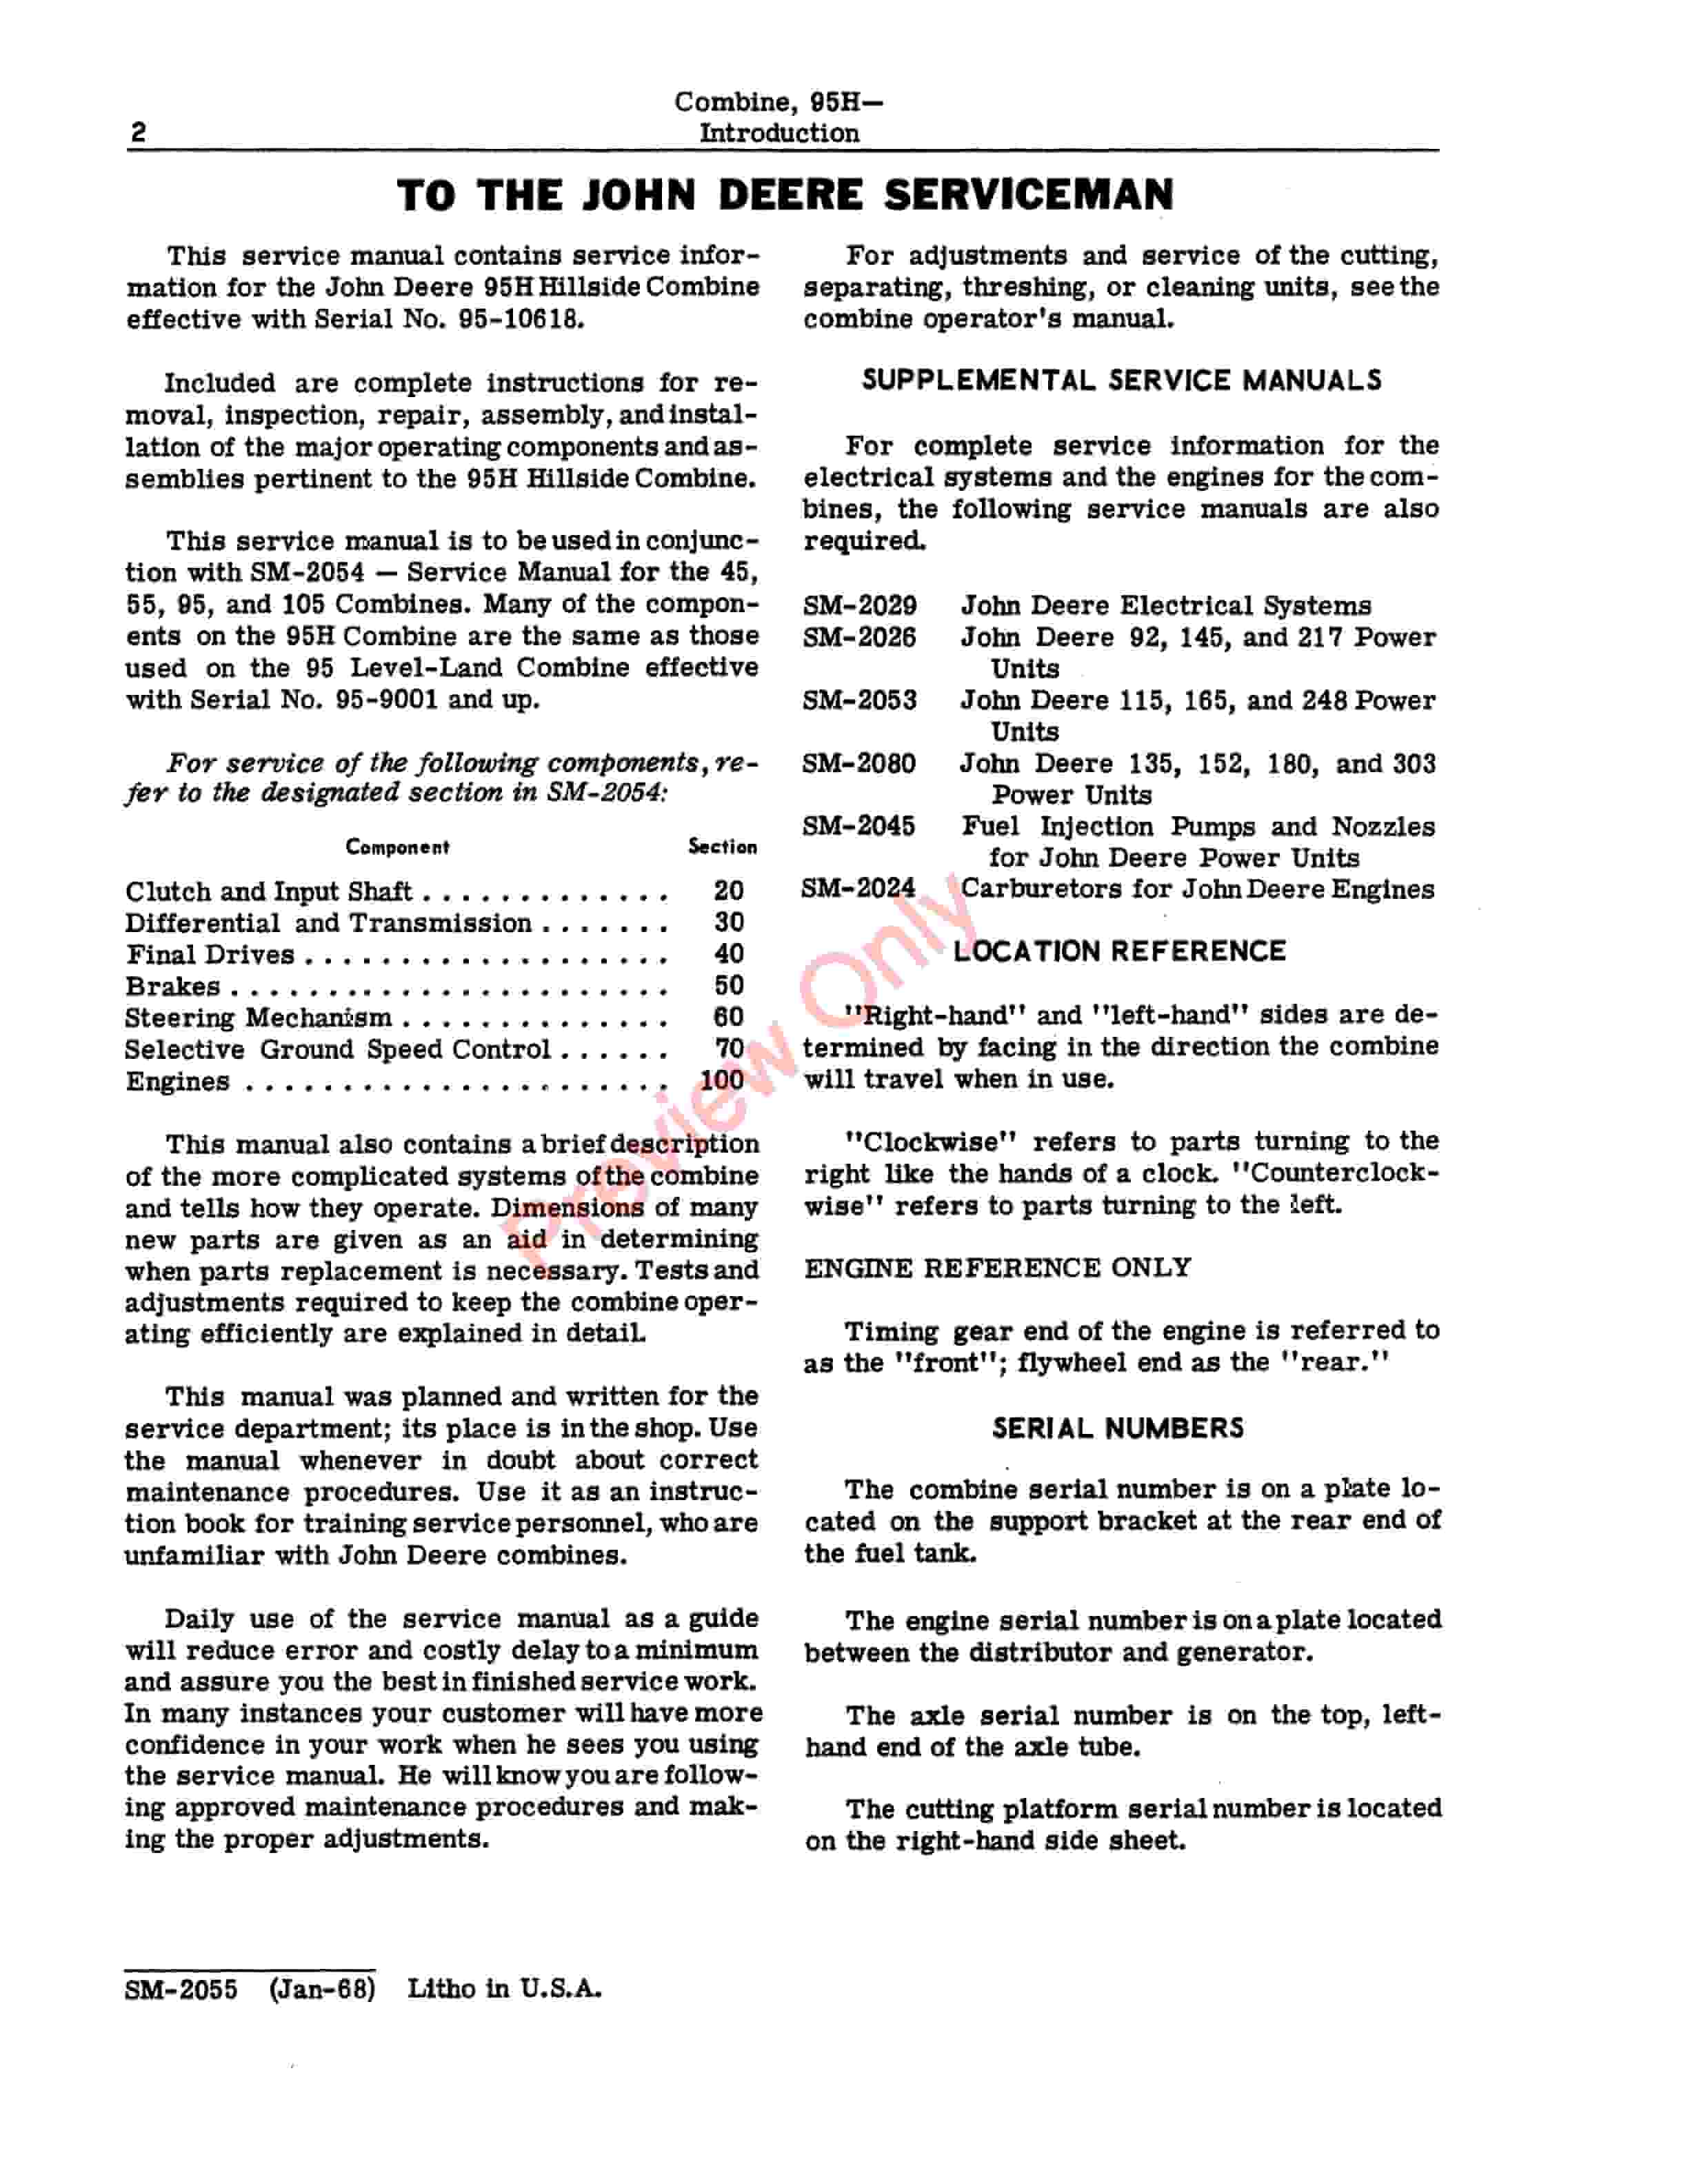 John Deere 95H Hillside Combine Service Manual SM2055 01JAN68 4